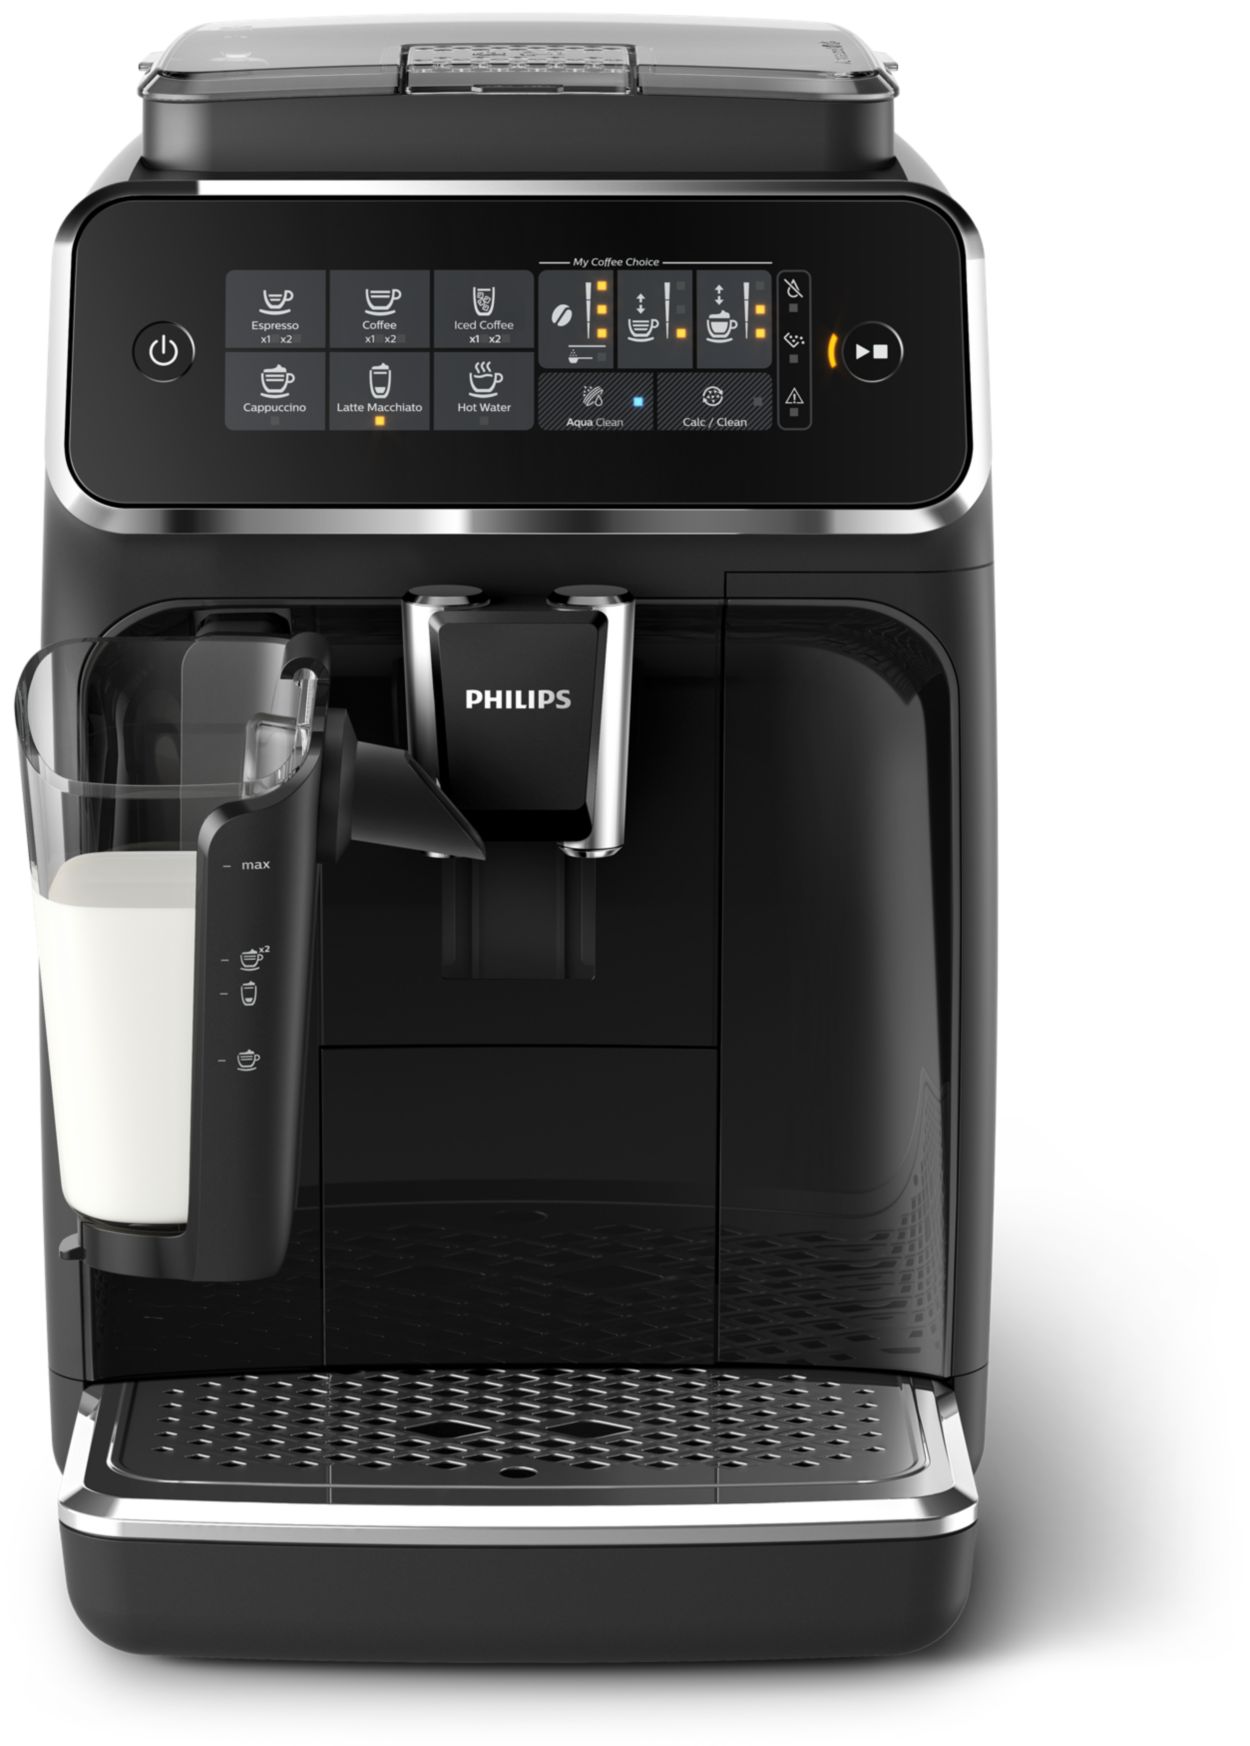 Philips Espresso Machines & Coffee Makers